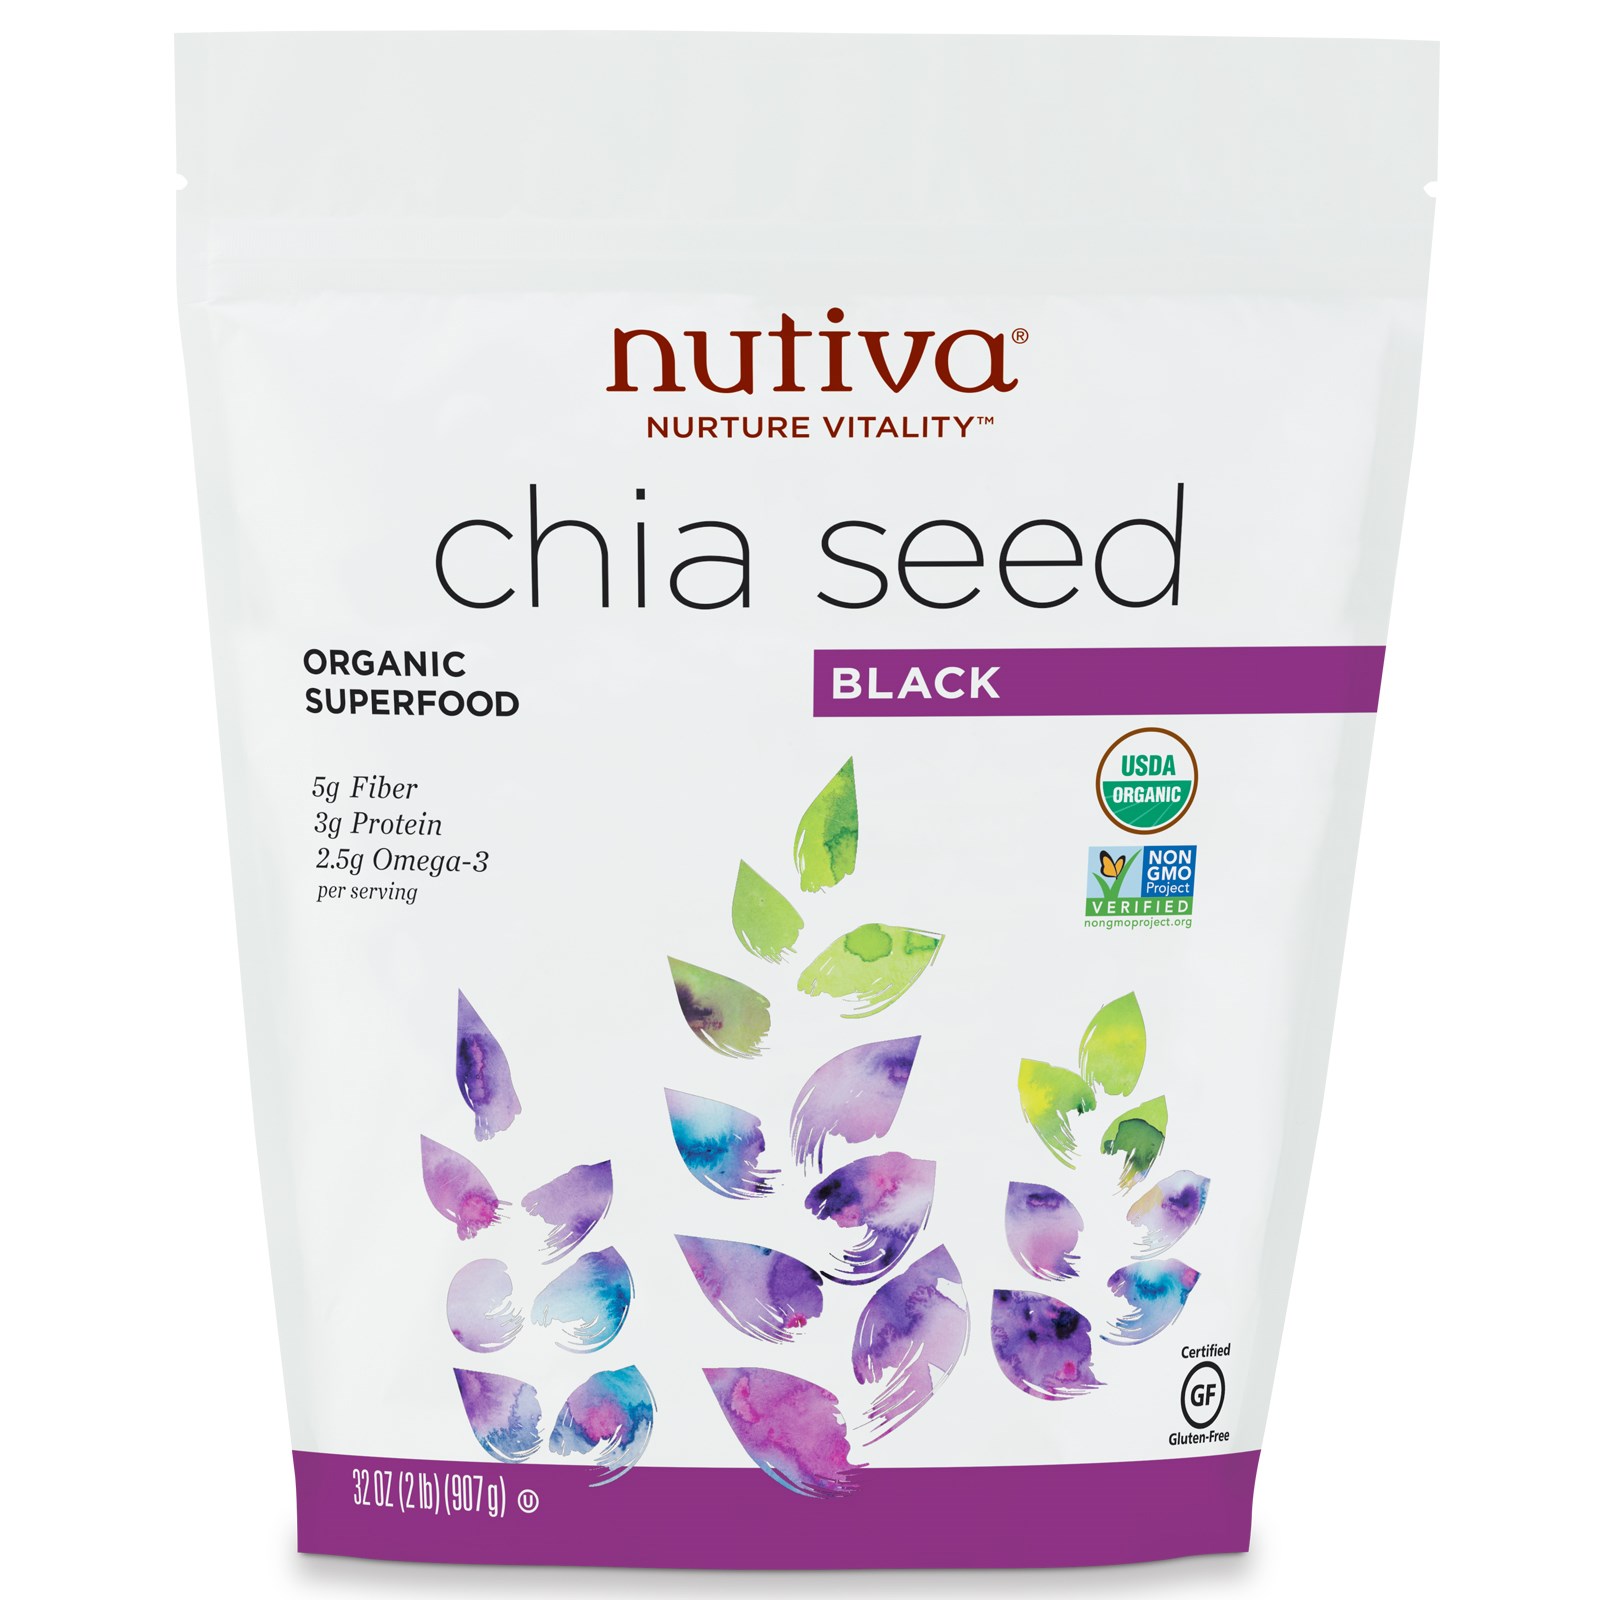 hat-chia-seed-nutiva-907g-cua-my-2